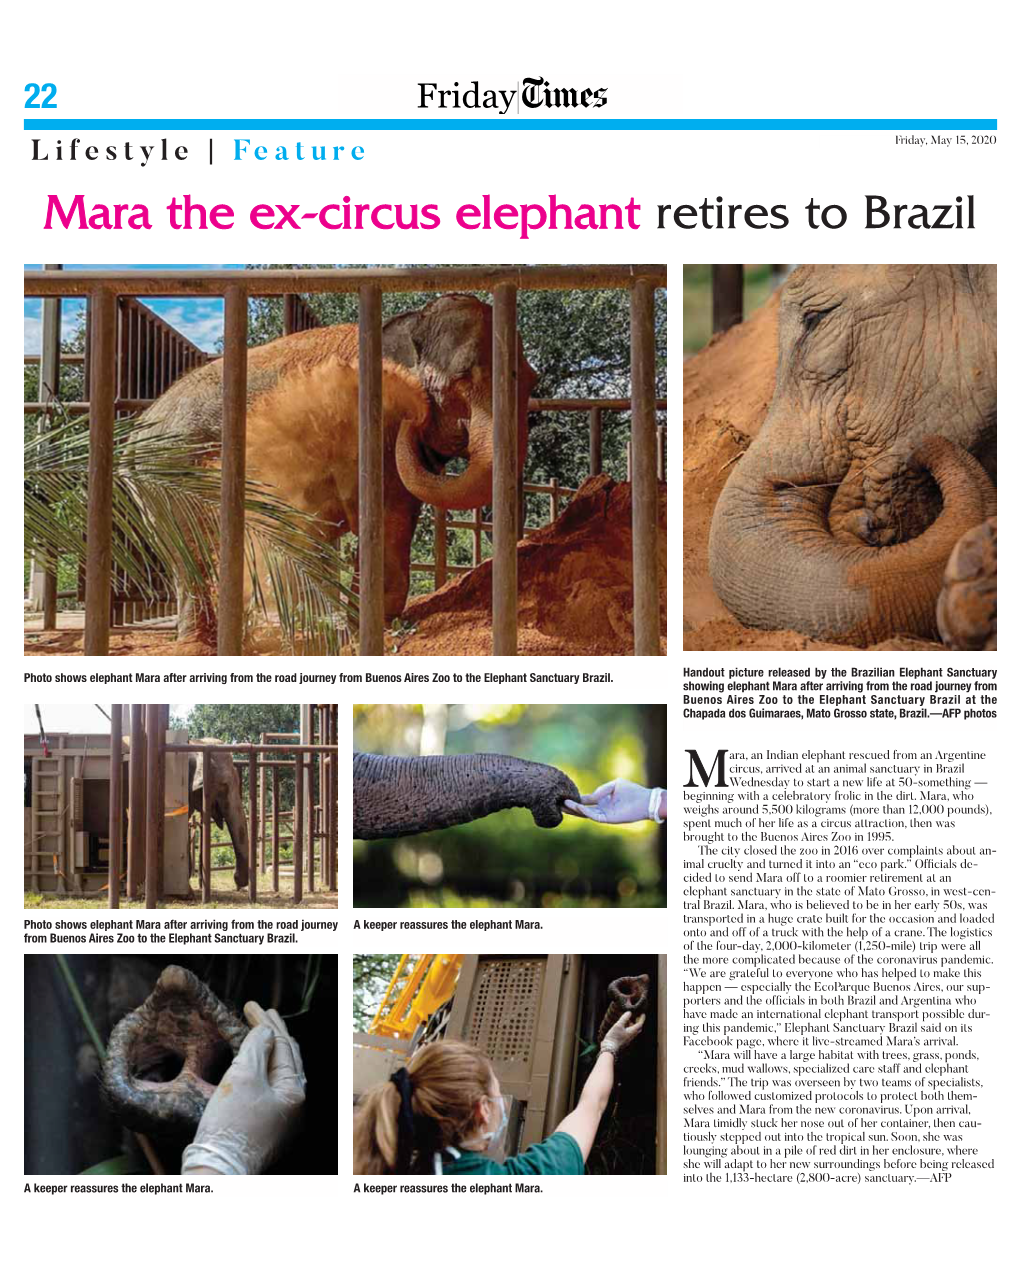 Mara the Ex-Circus Elephant Retires to Brazil